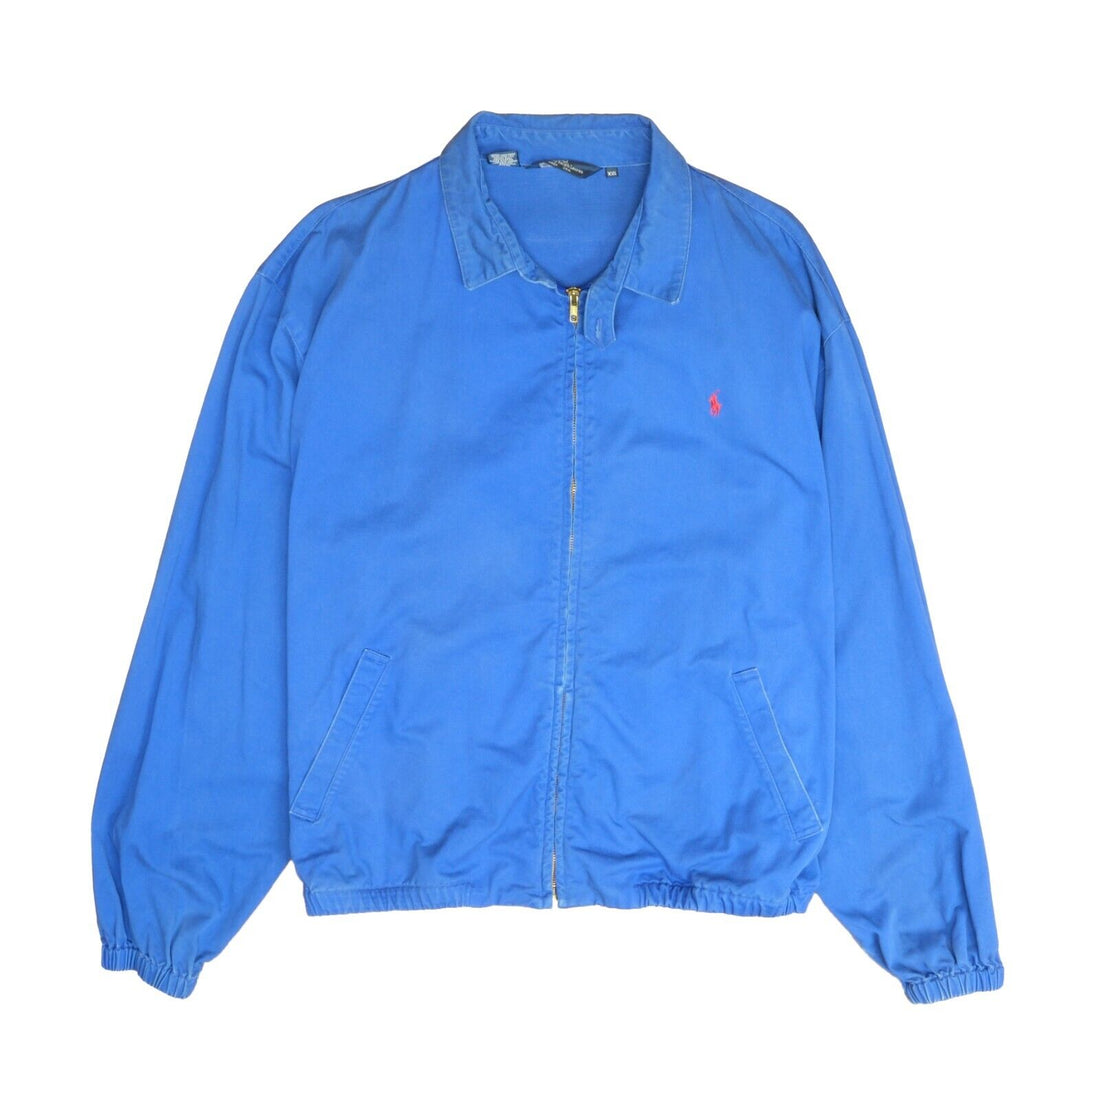 Vintage Polo Ralph Lauren Harrington Jacket Size 2XL Blue Embroidered